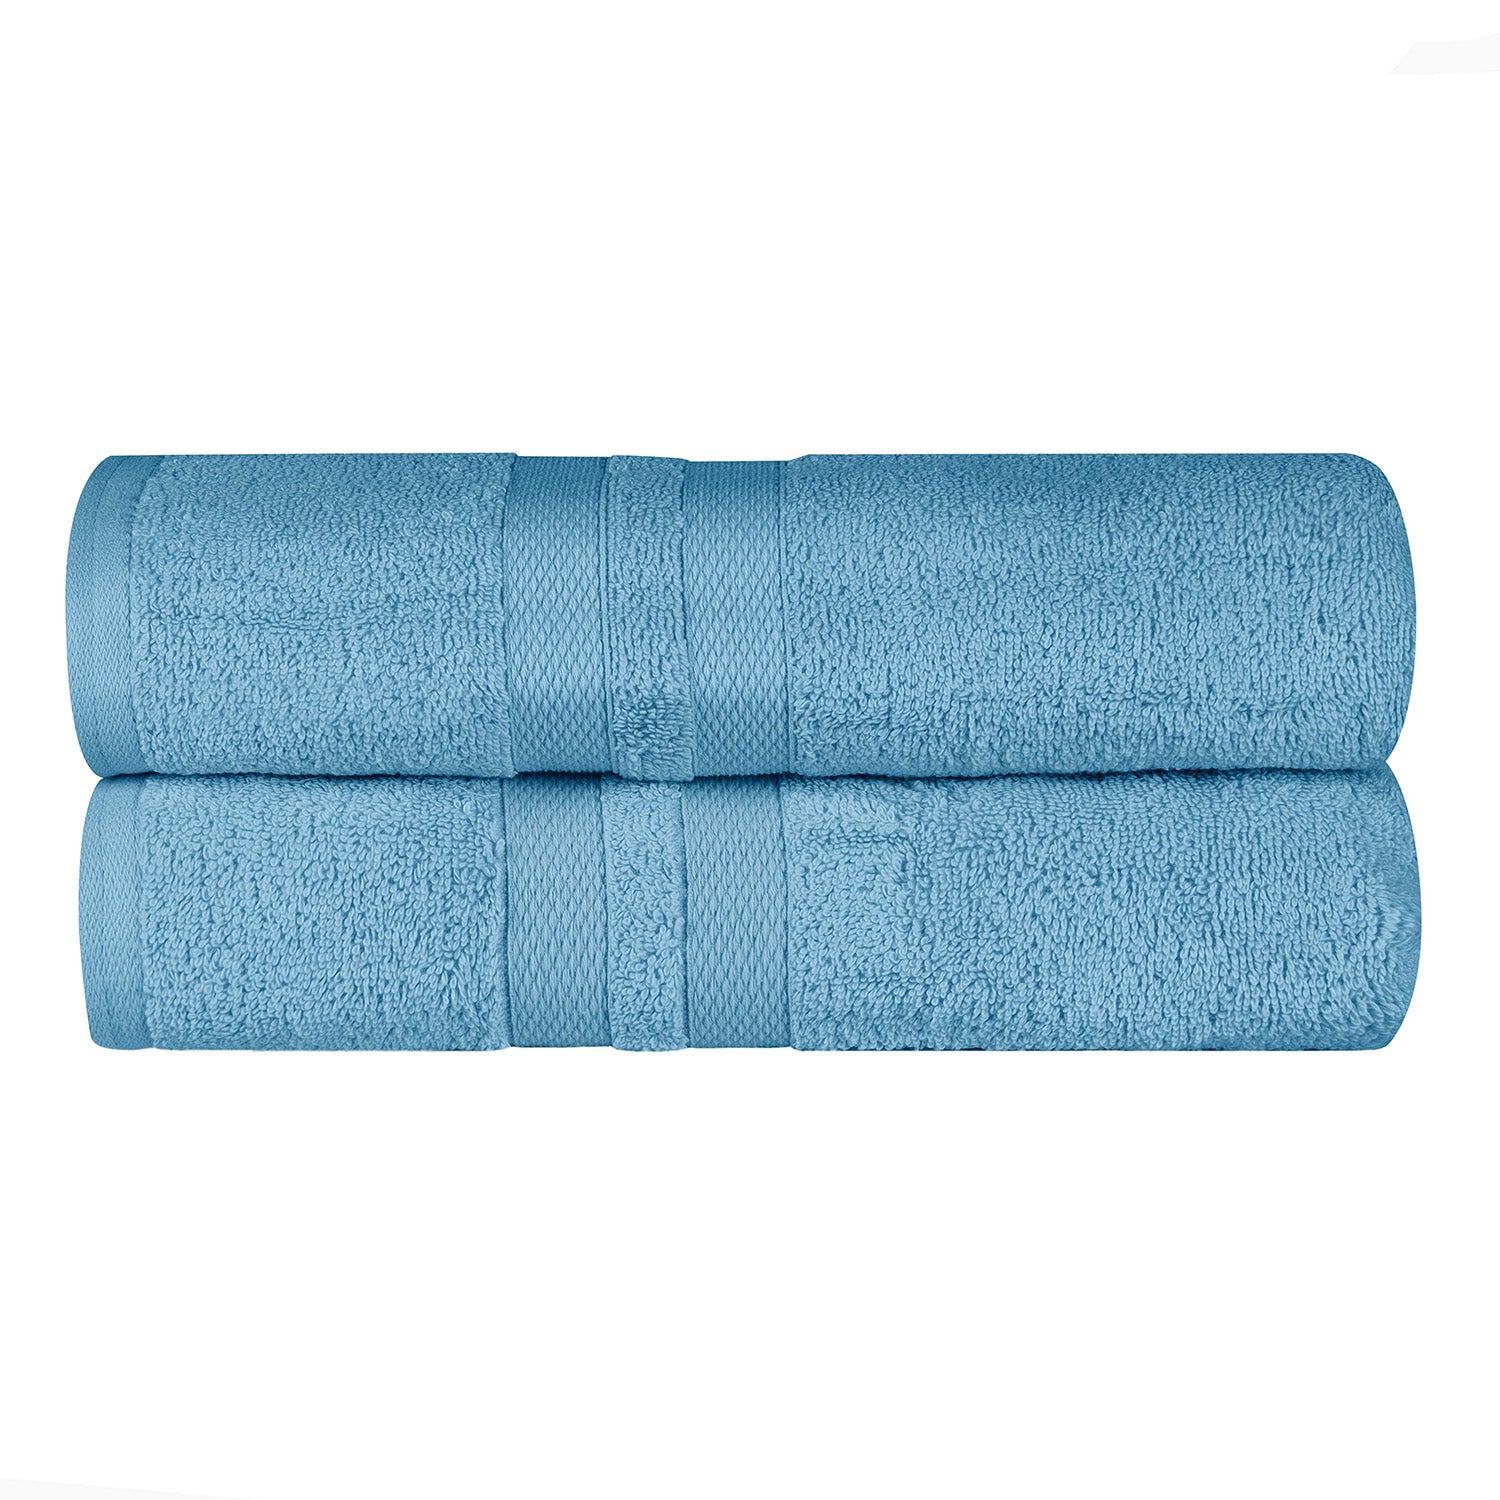 Superior Ultra Soft Cotton Absorbent Solid Bath Sheet (Set of 2) -  Denim Blue